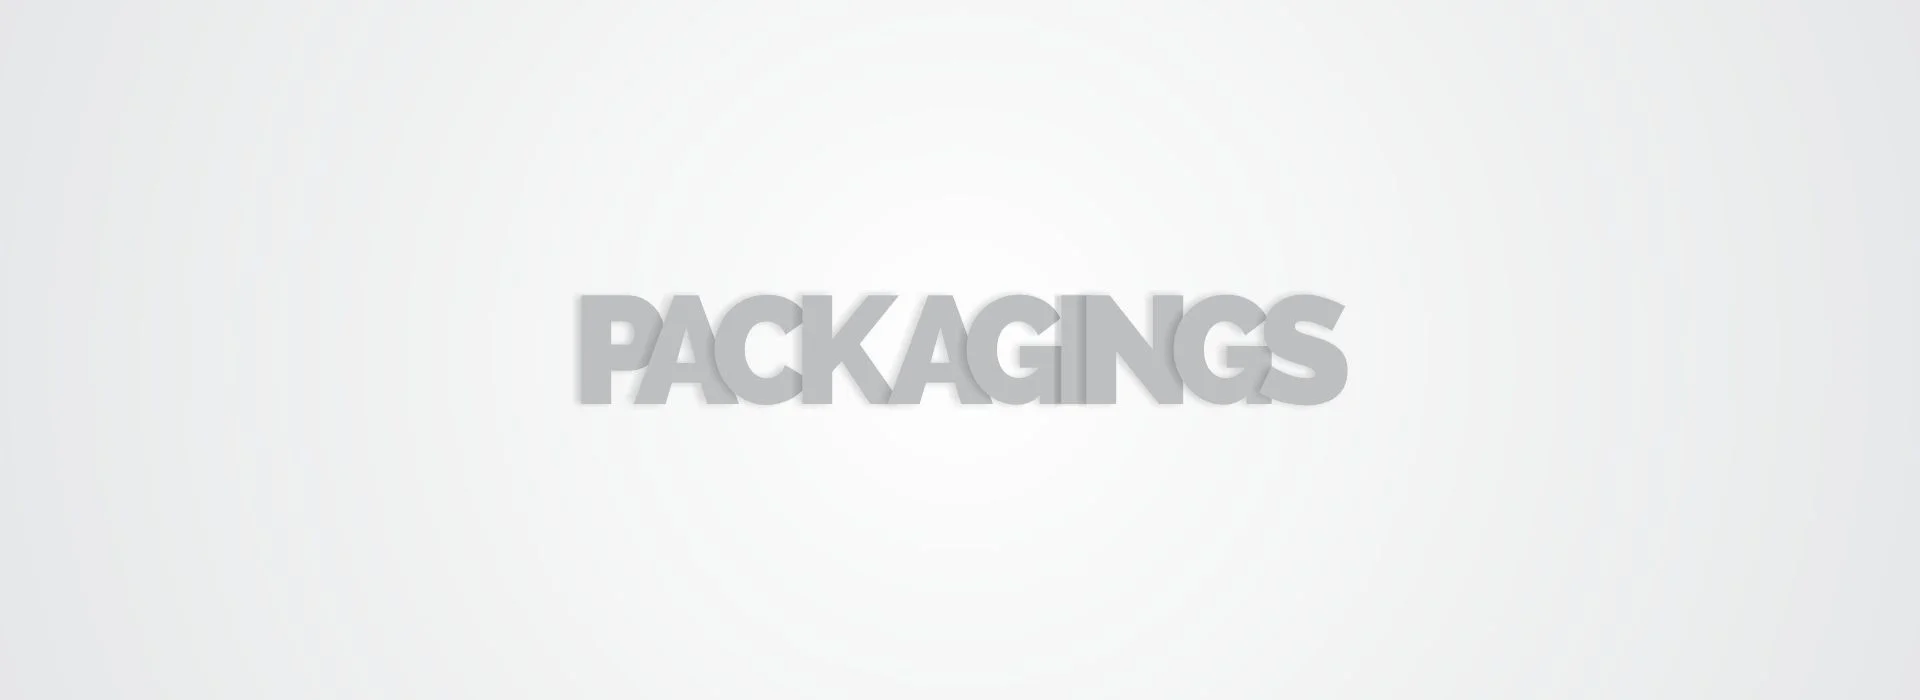 packaging banner